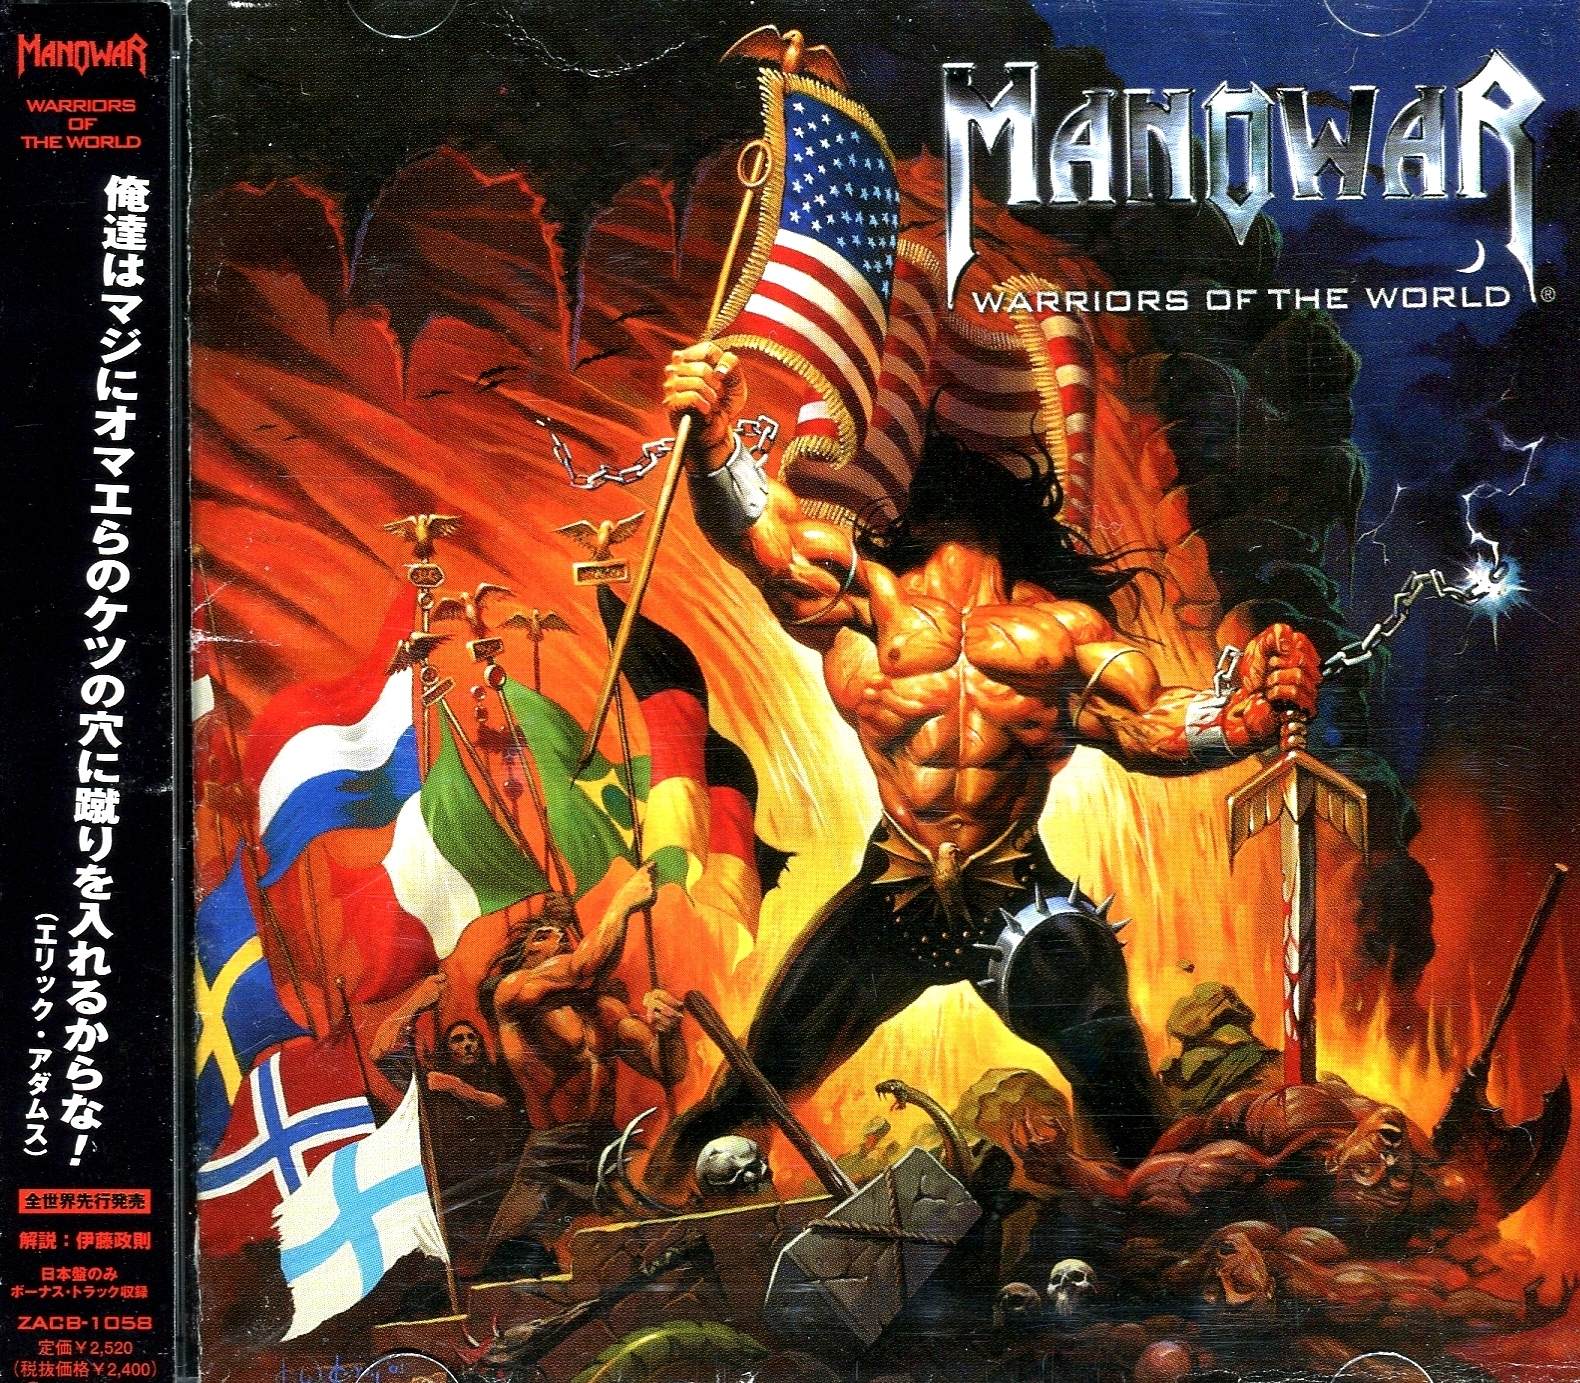 Manowar united warriors